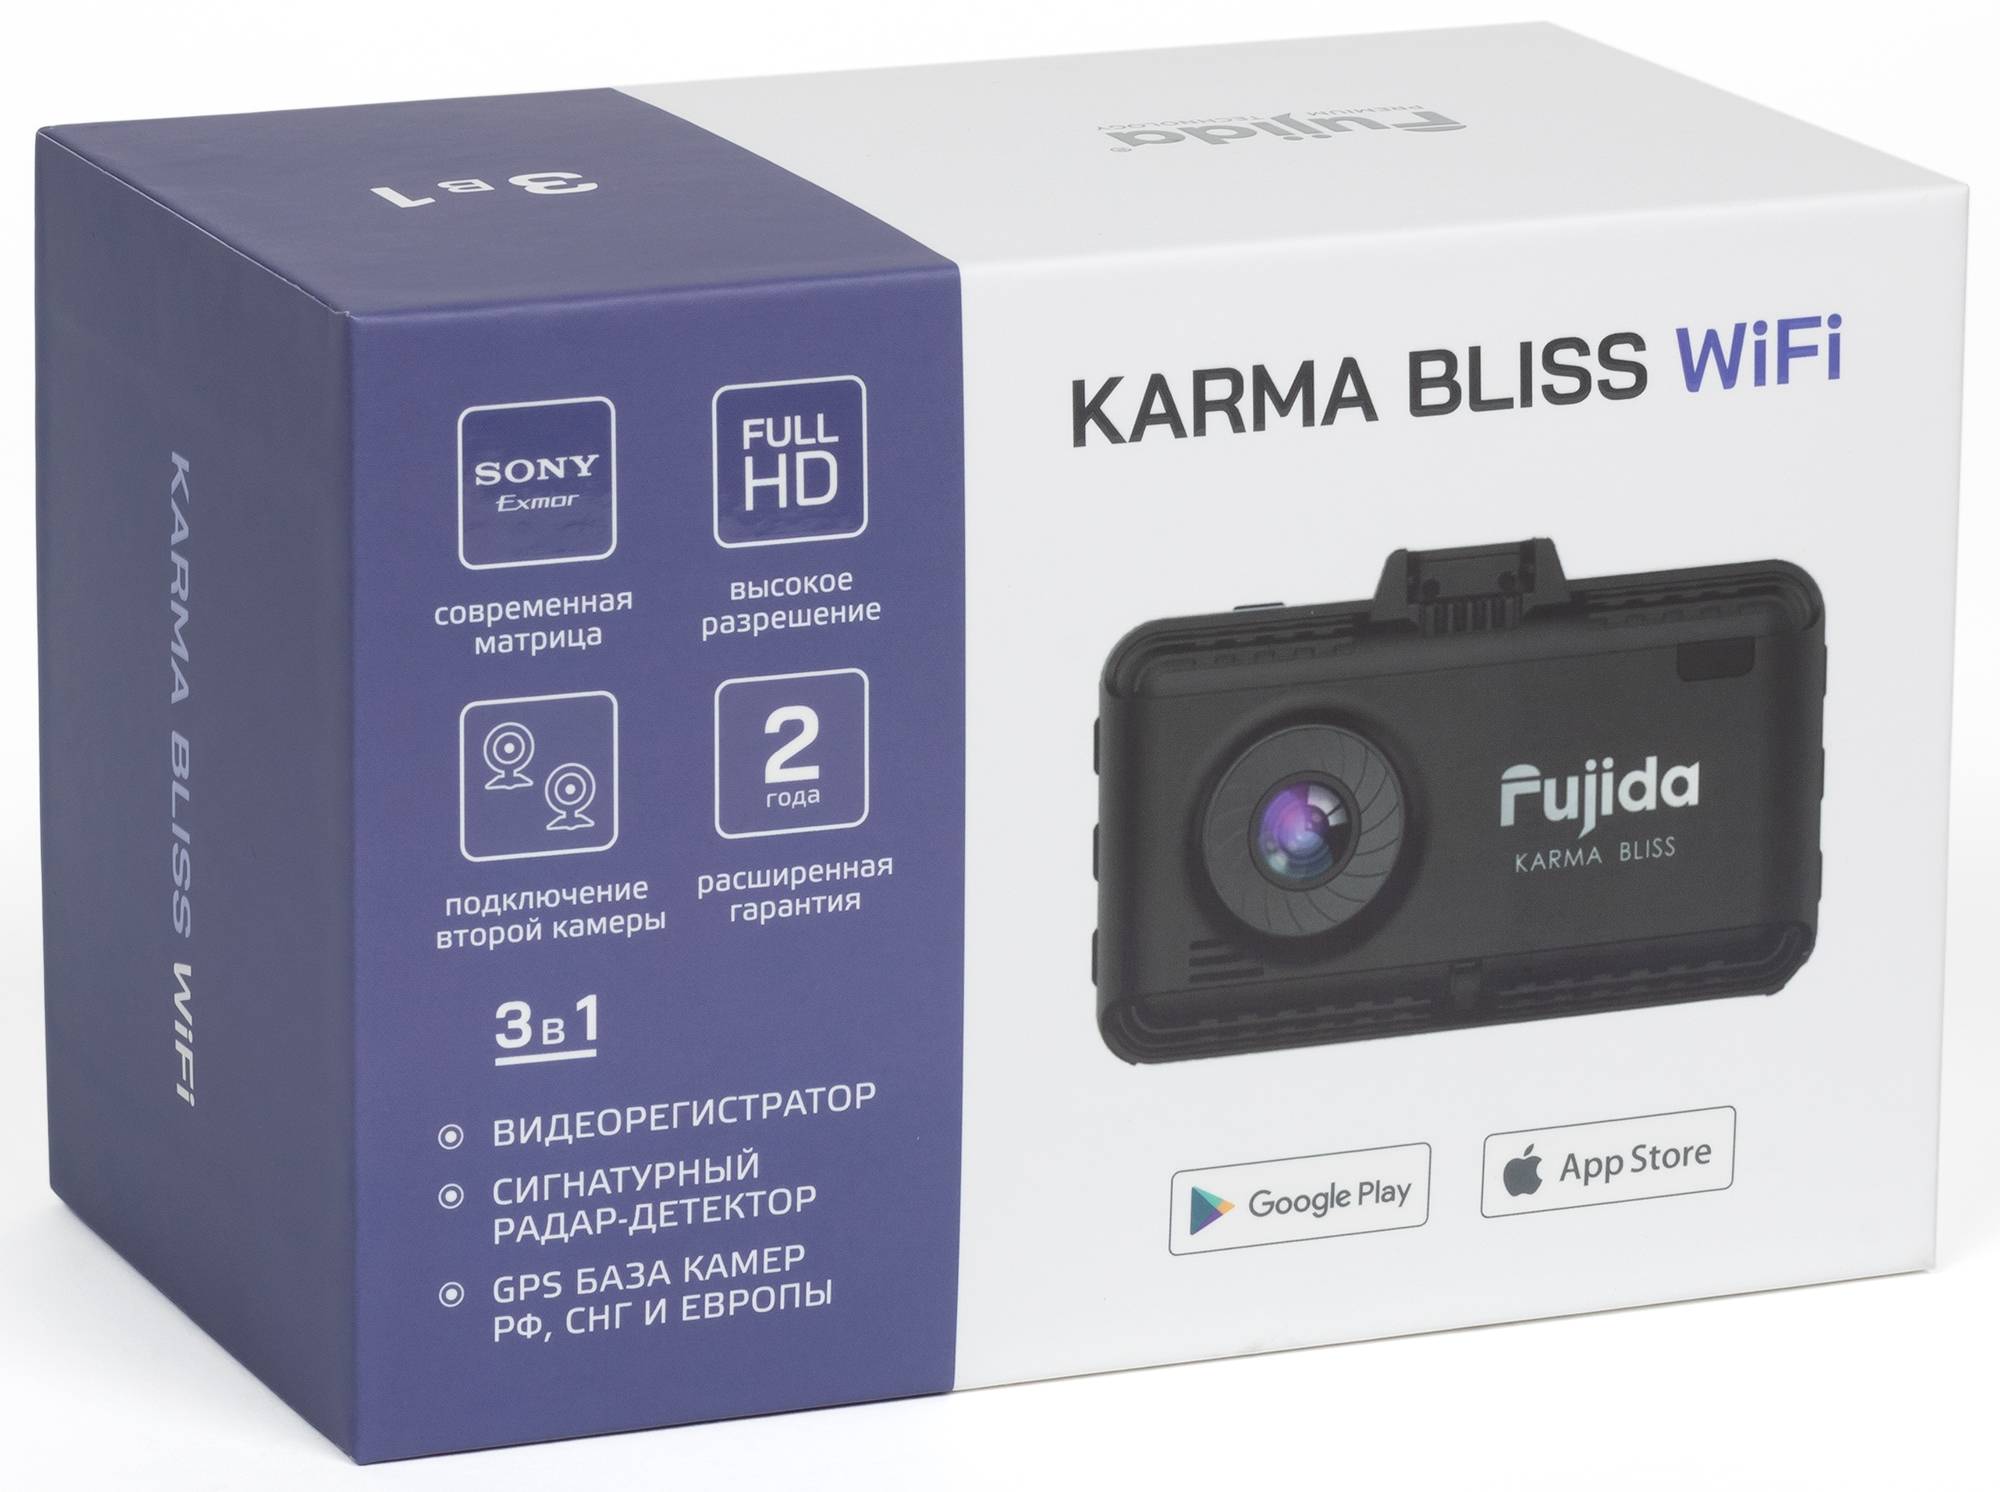 Fujida karma bliss s wifi. подробный обзор комбо-устройства